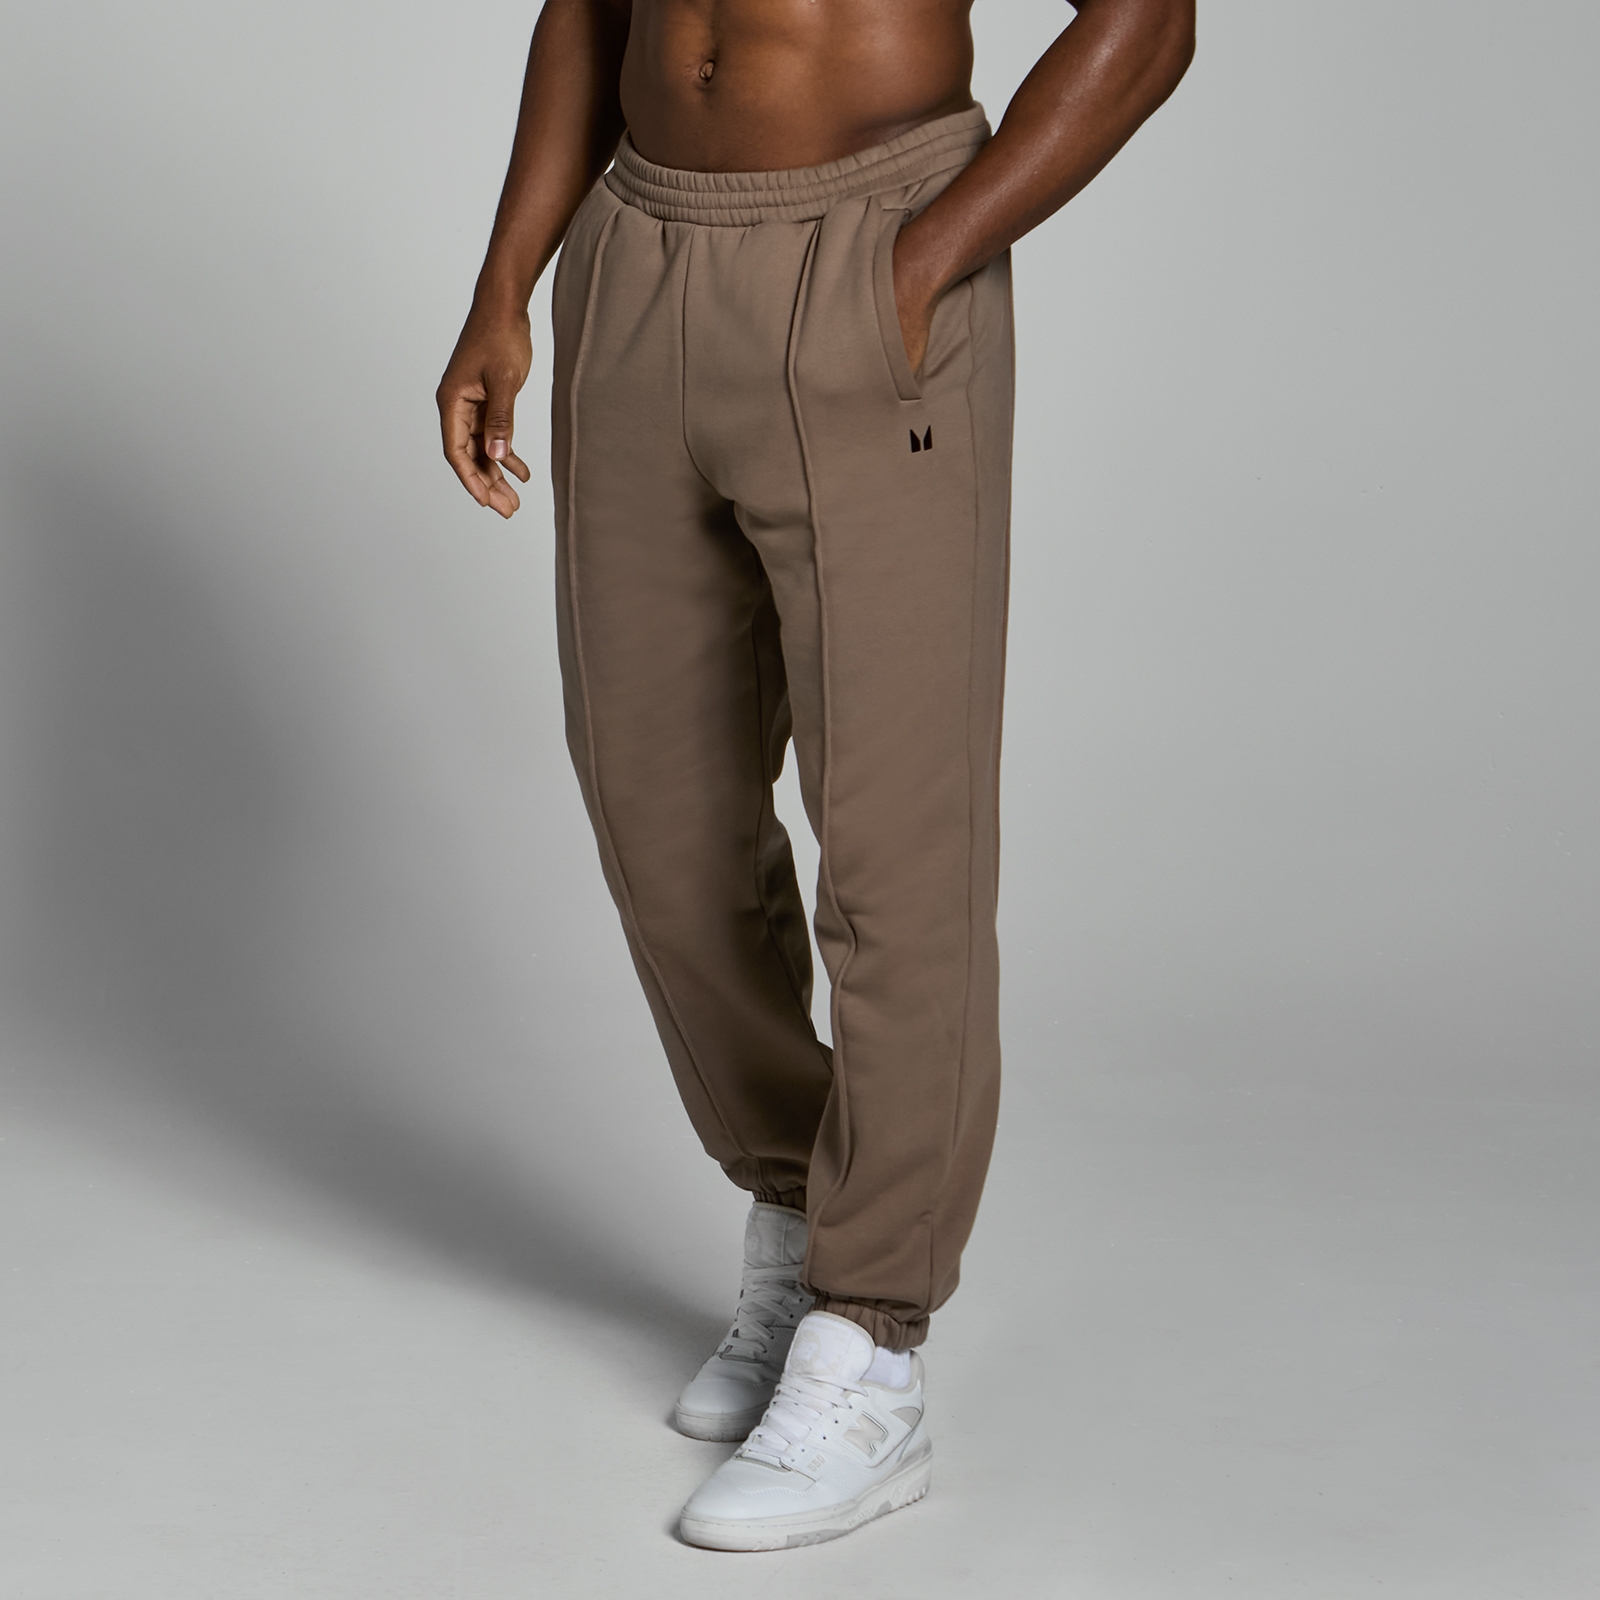 Image of Pantaloni da jogging pesanti oversize MP Lifestyle da uomo - Marrone chiaro - XXXL